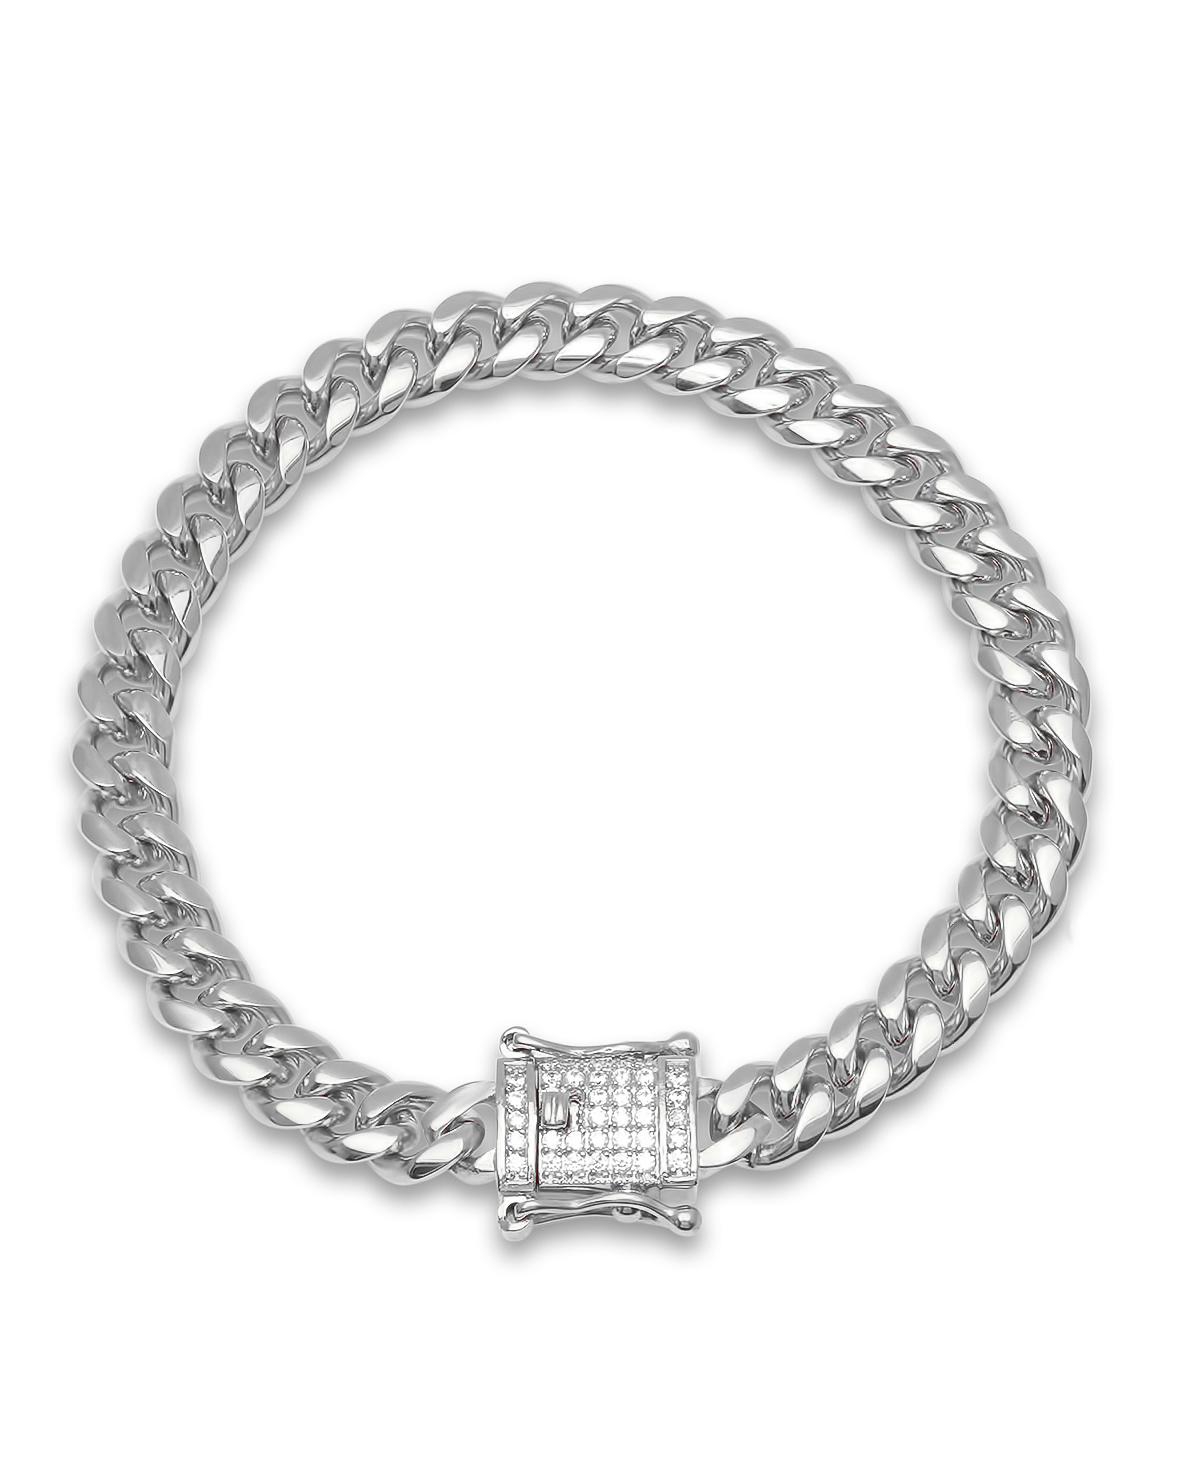 Miami Cuban Chain with Simulated Diamond Box Clasp Bracelet - Metallic